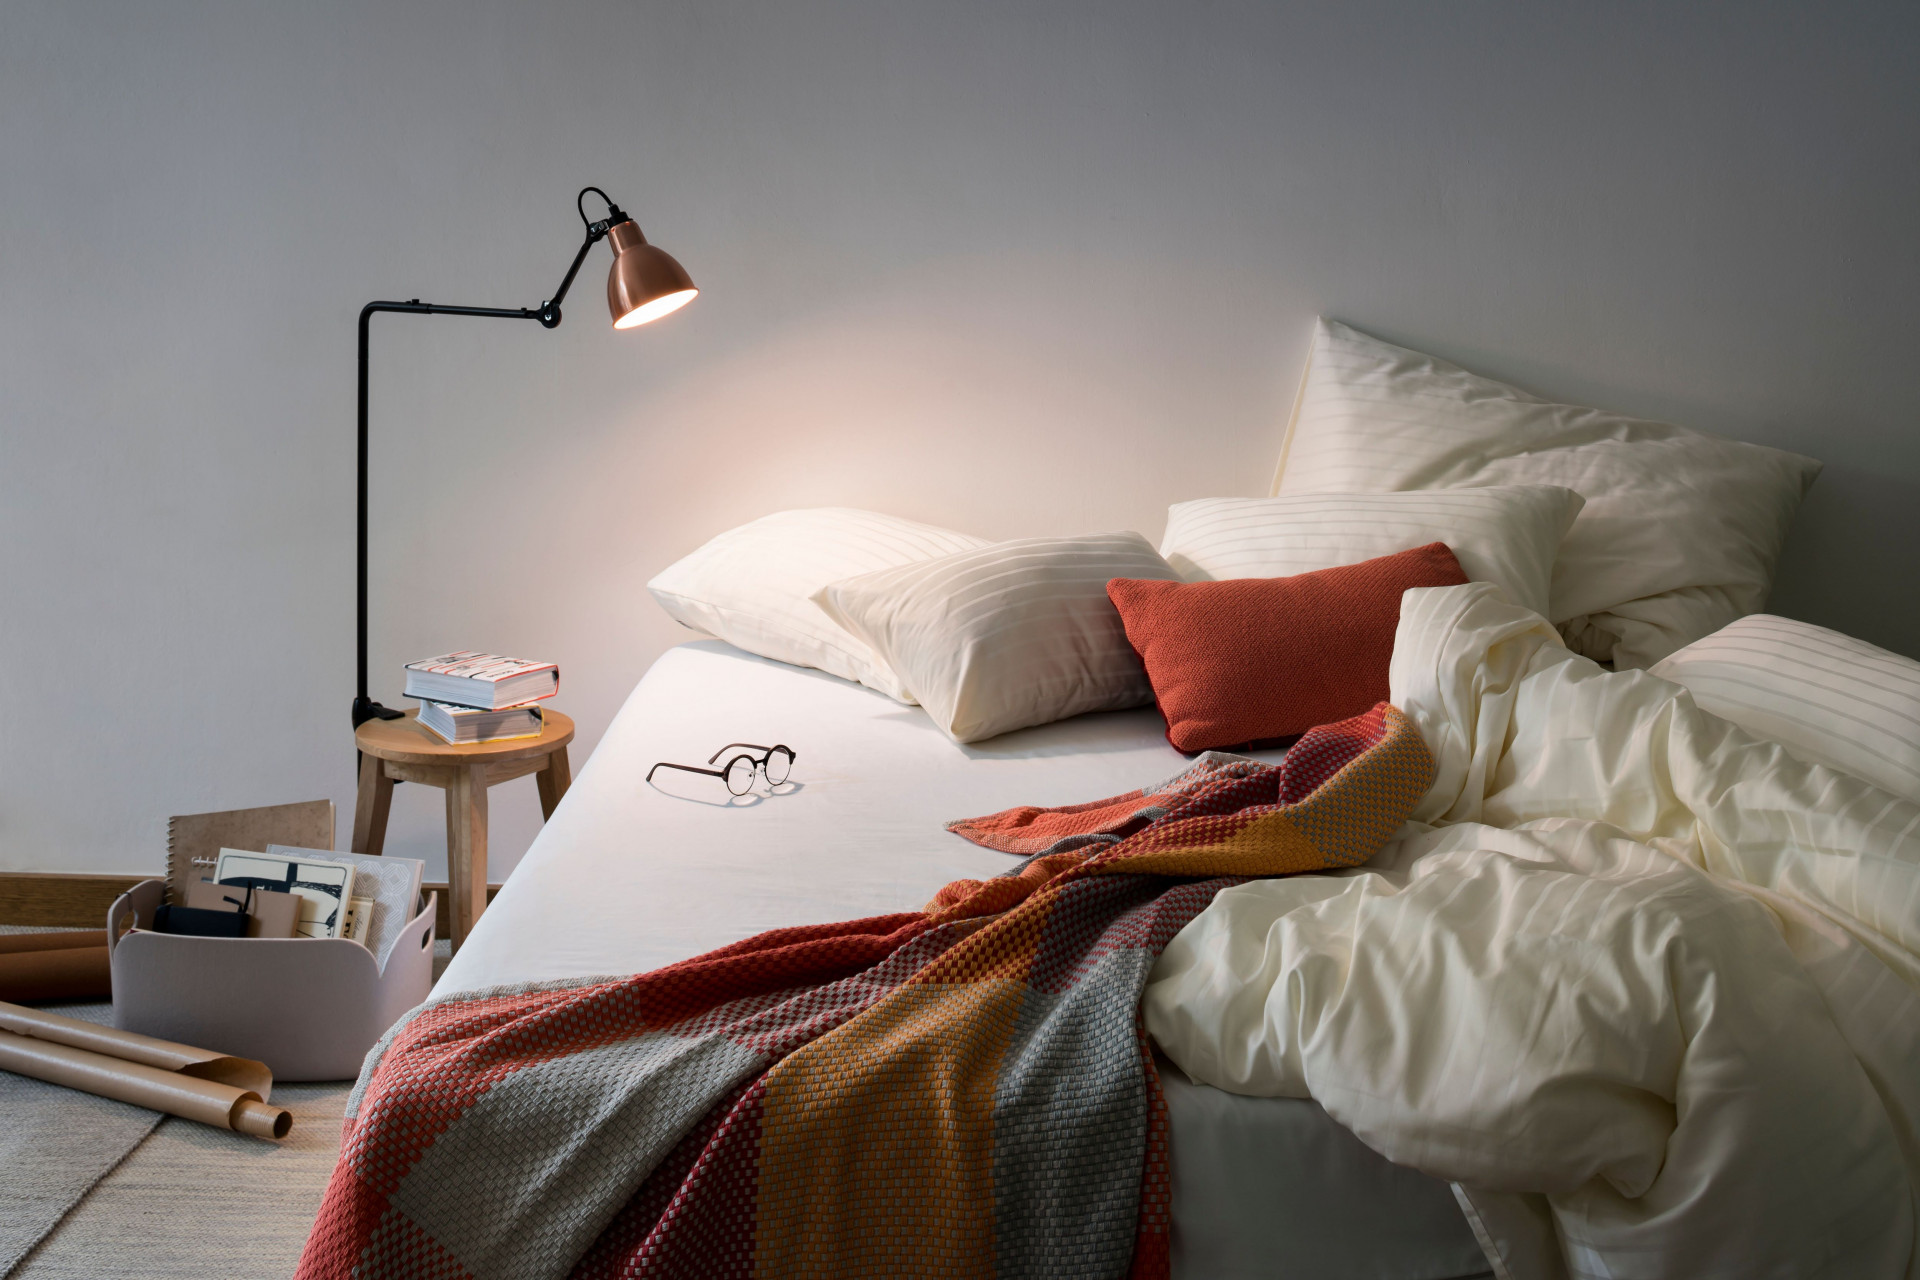 Lejaan bed linen ensures well-rested sleep.